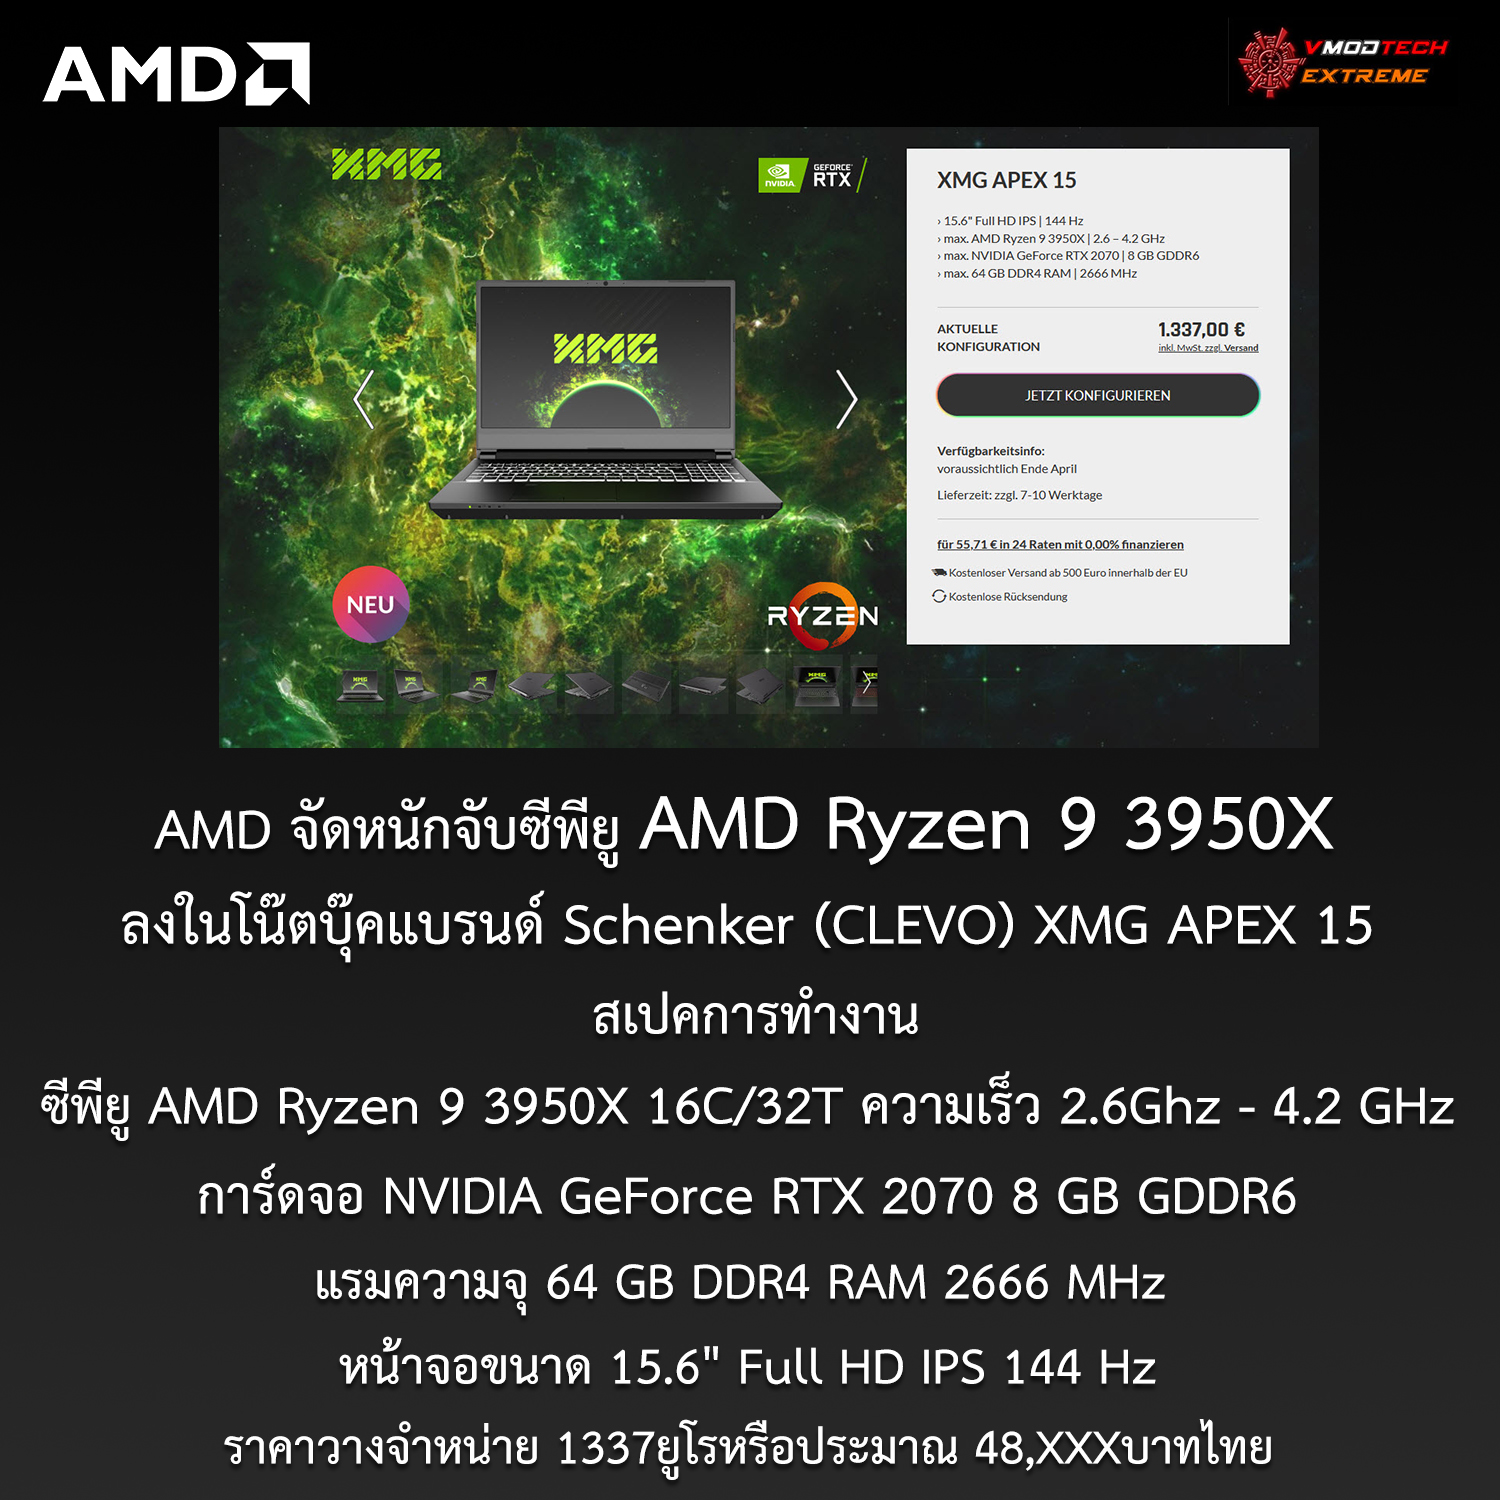 amd ryzen 9 3950x schenker clevo xmg apex 15 AMD จัดหนักจับซีพียู AMD Ryzen 9 3950X 16C/32T ลงในโน๊ตบุ๊คแบรนด์ Schenker (CLEVO) XMG APEX 15 แบบจัดเต็มในราคาประมาณ 48,XXXบาทไทย 